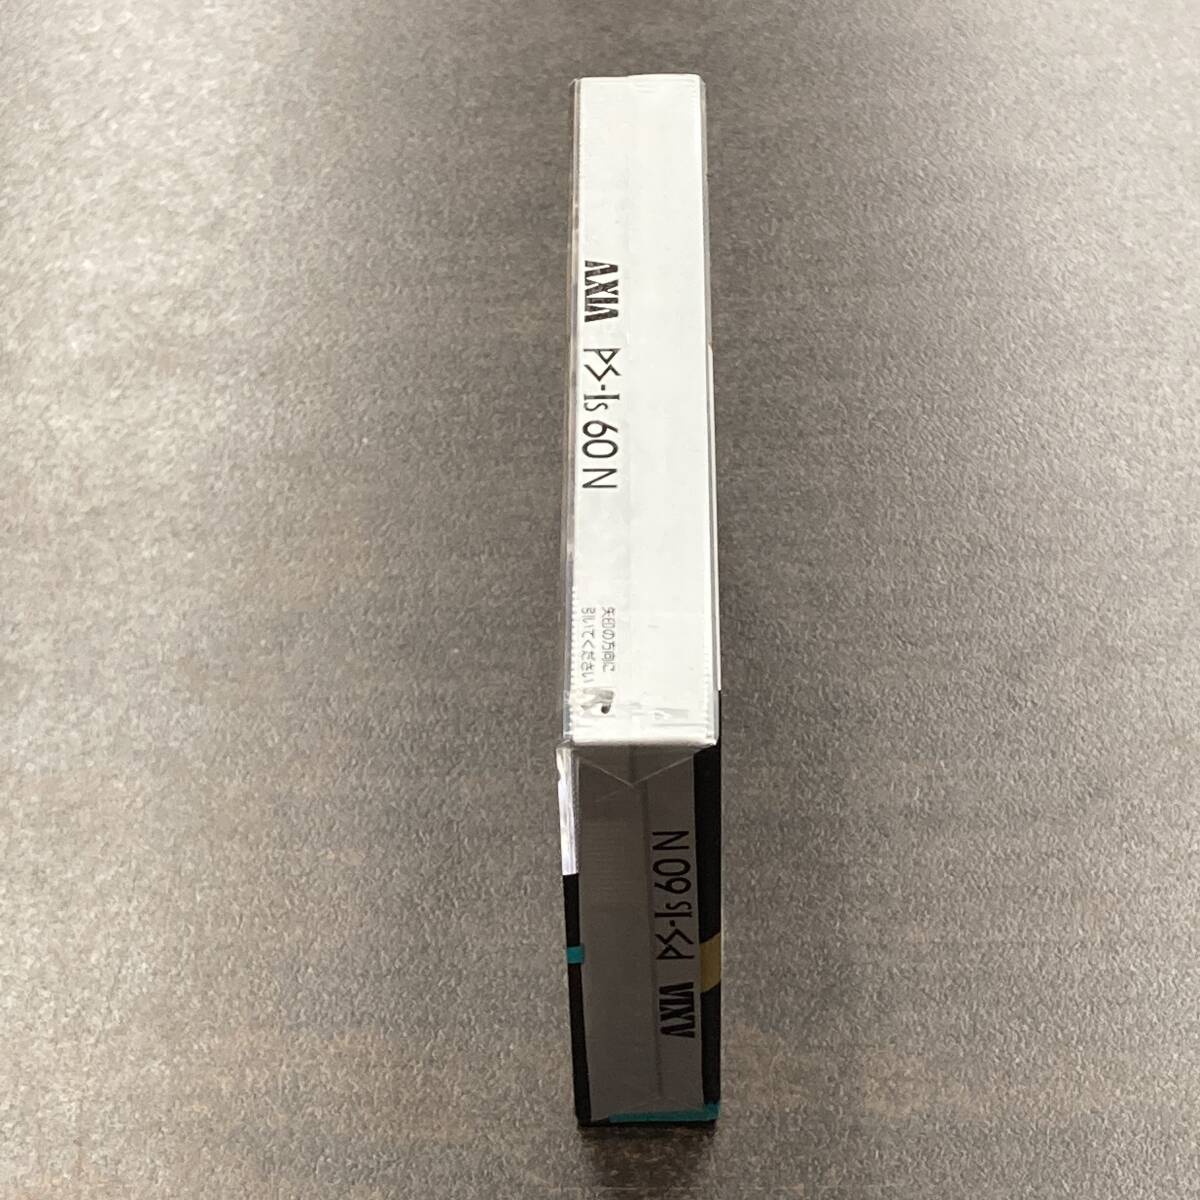 2004N 未使用 アクシア PS-Is 60分 ノーマル 1本 カセットテープ/One AXIA Type I Normal Position unused Audio Cassette_画像4